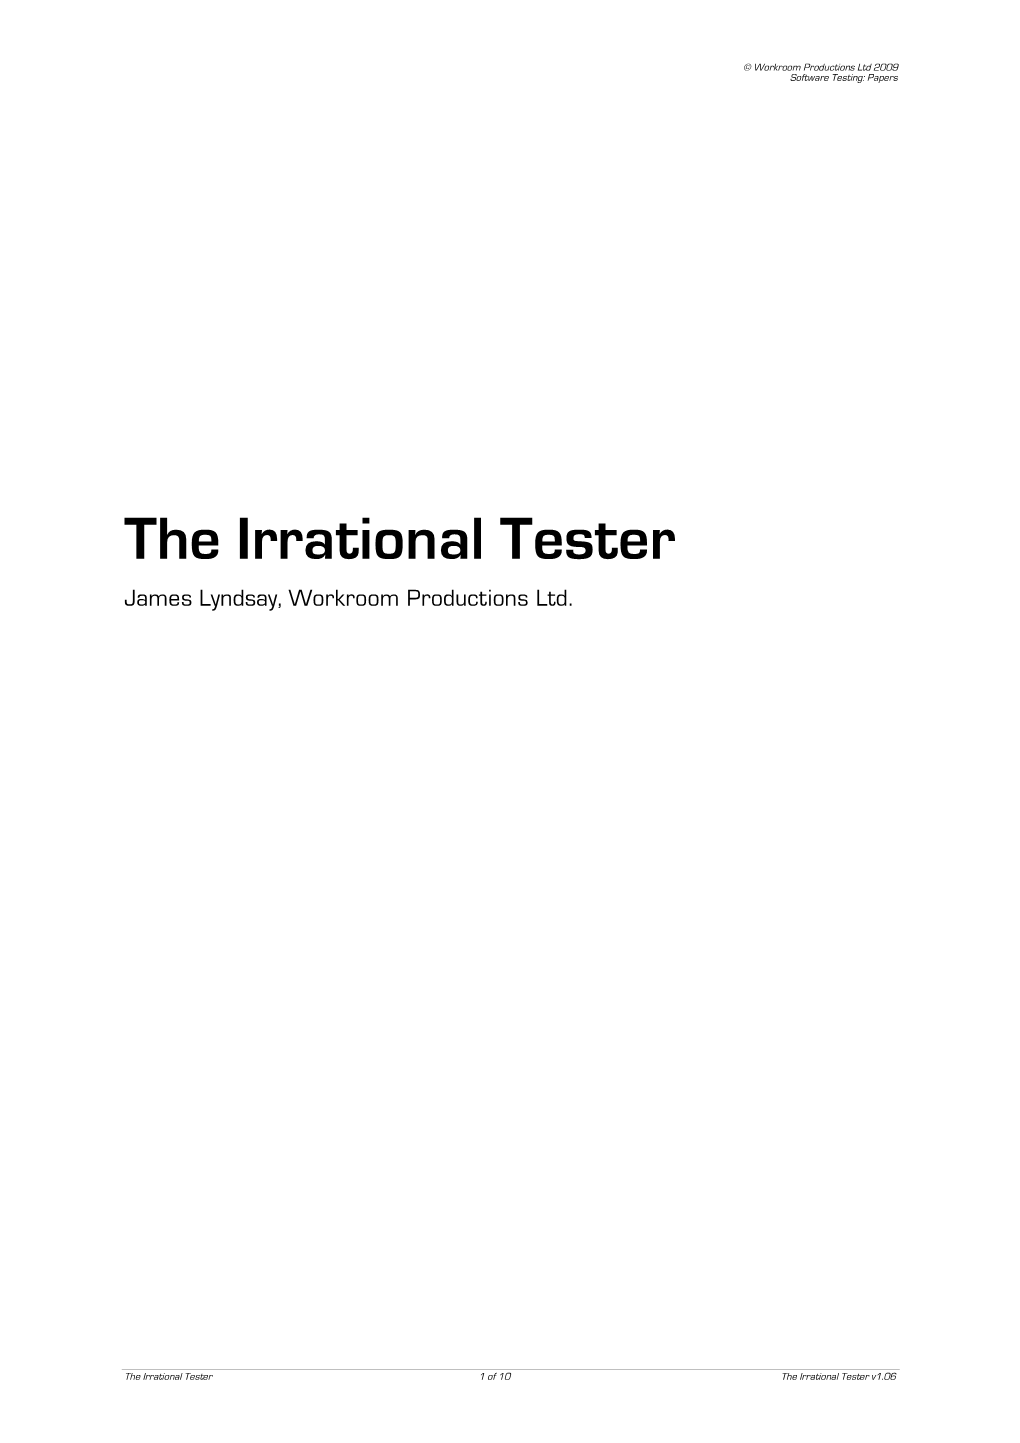 The Irrational Tester James Lyndsay, Workroom Productions Ltd